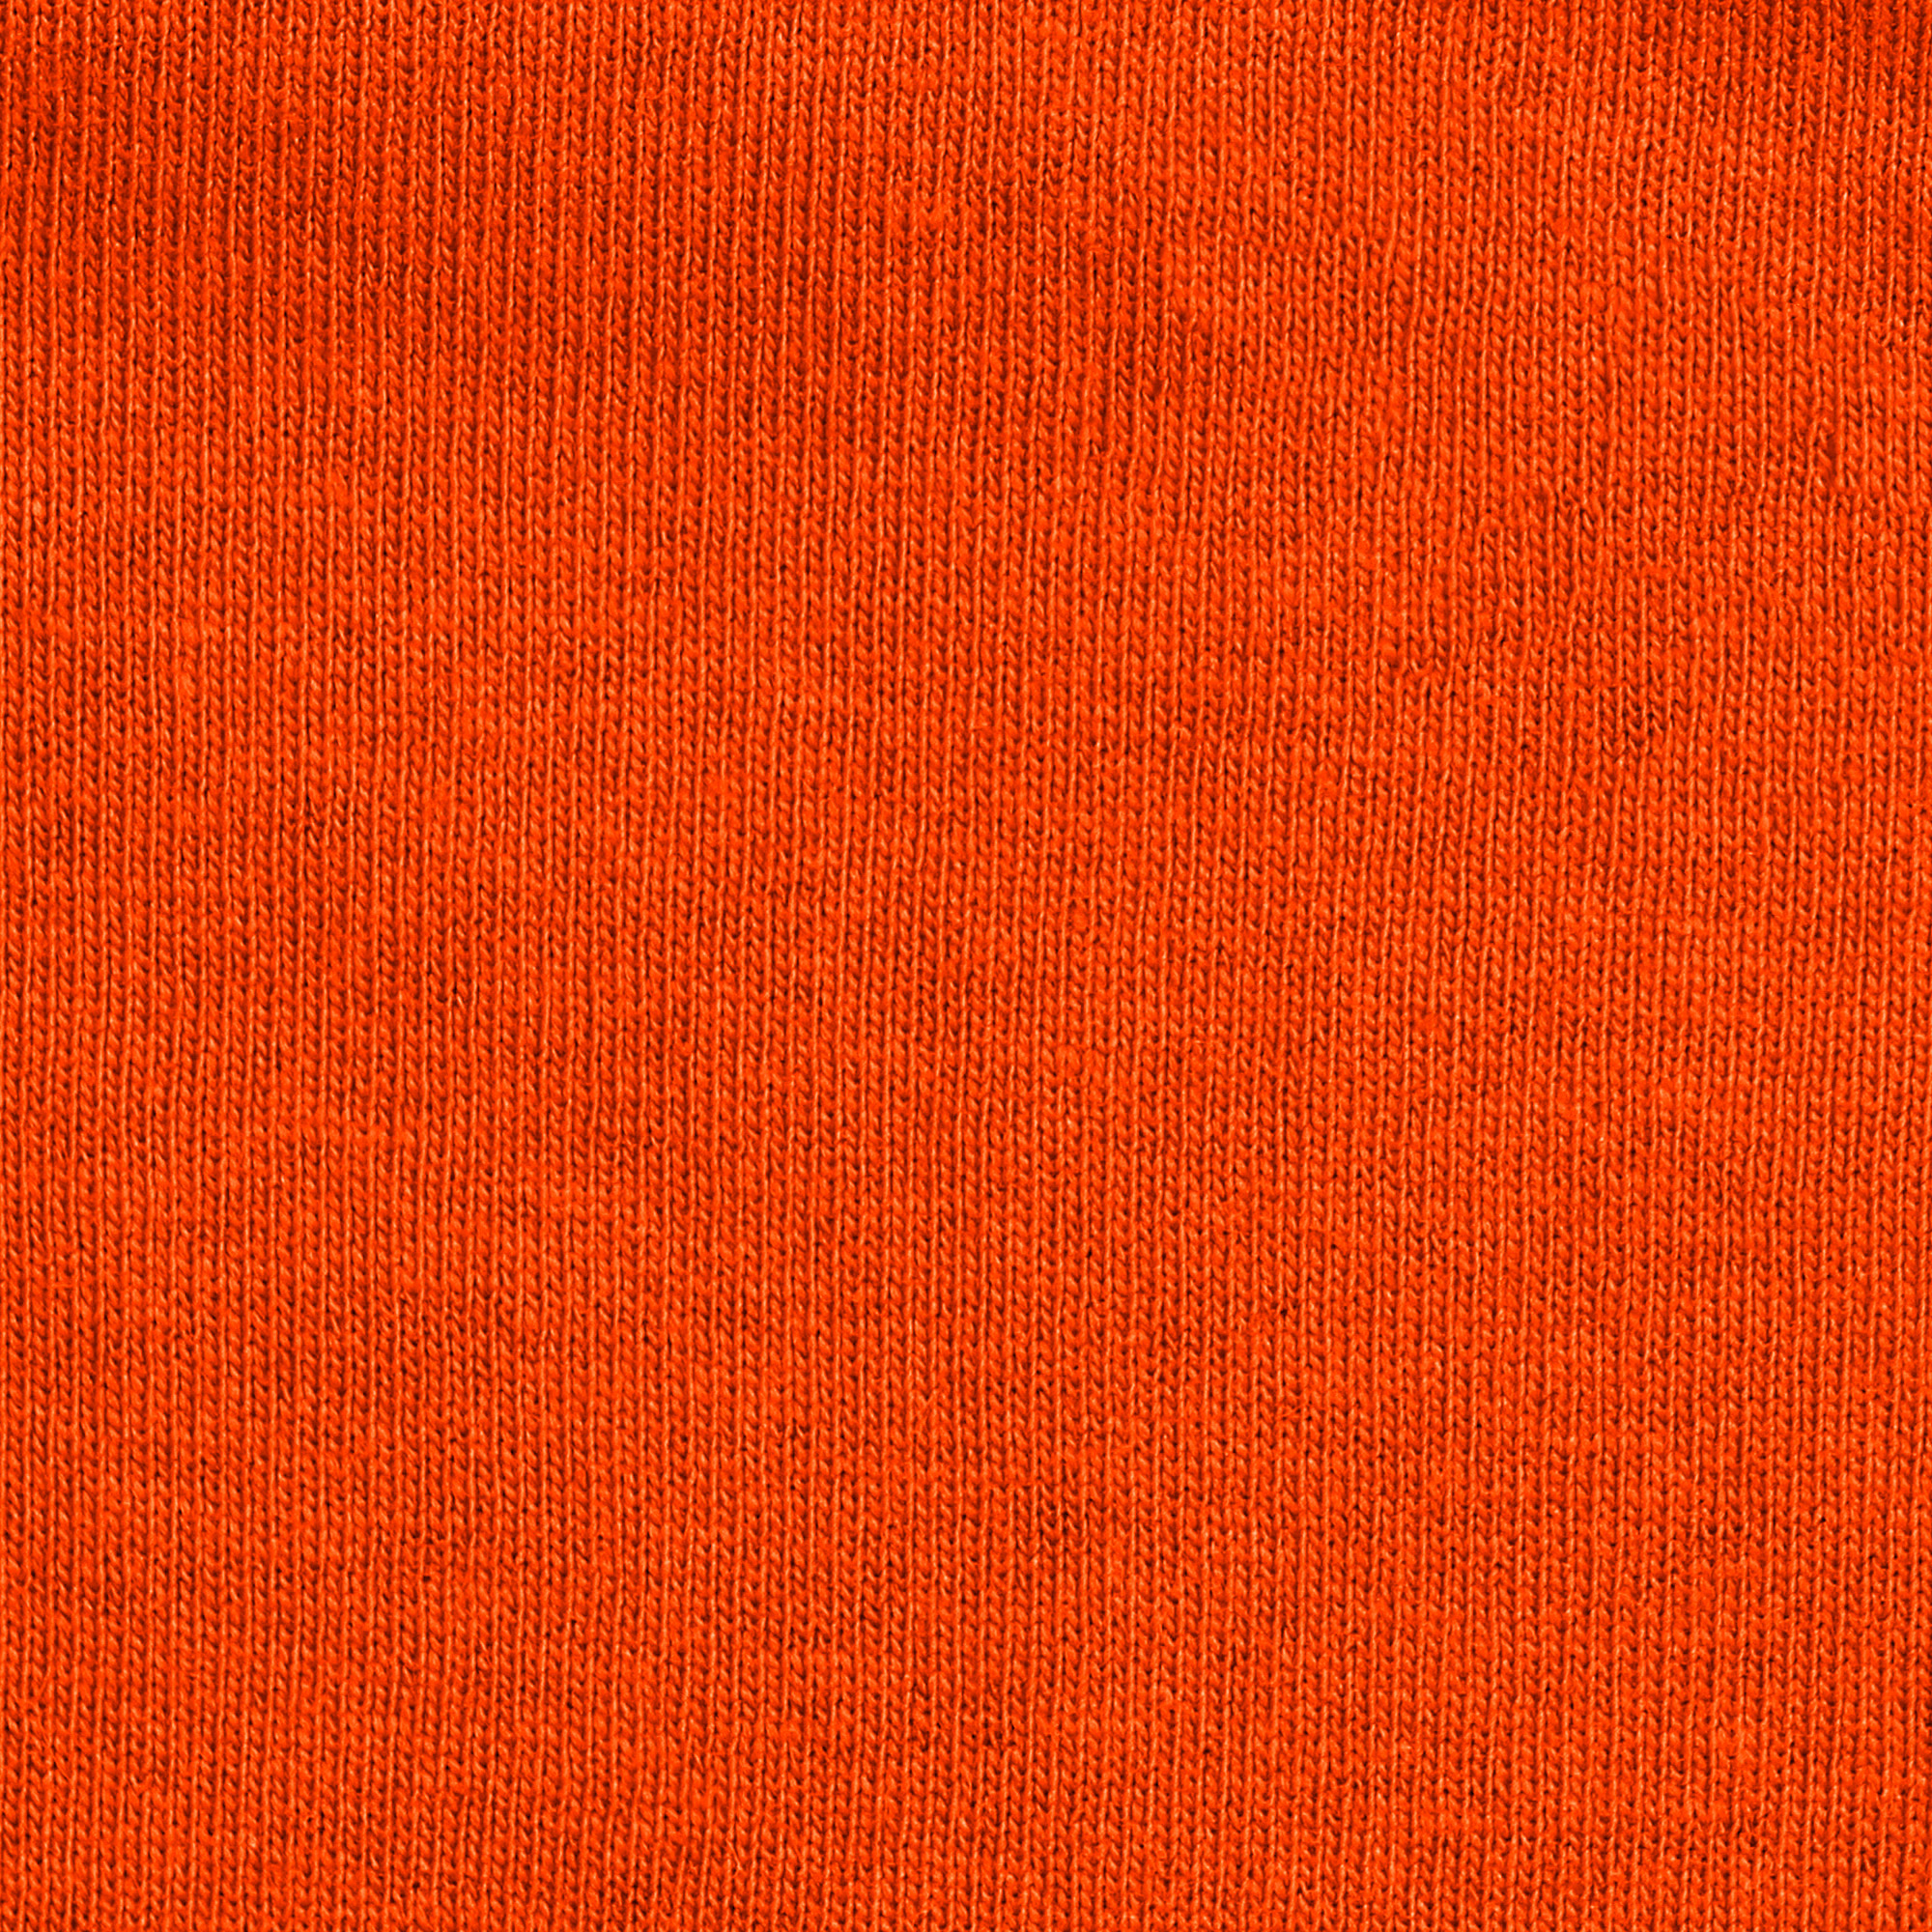 Футболка мужская M-1 Promo оранжевая с коротким рукавом M, цвет оранжевый, размер M - фото 3